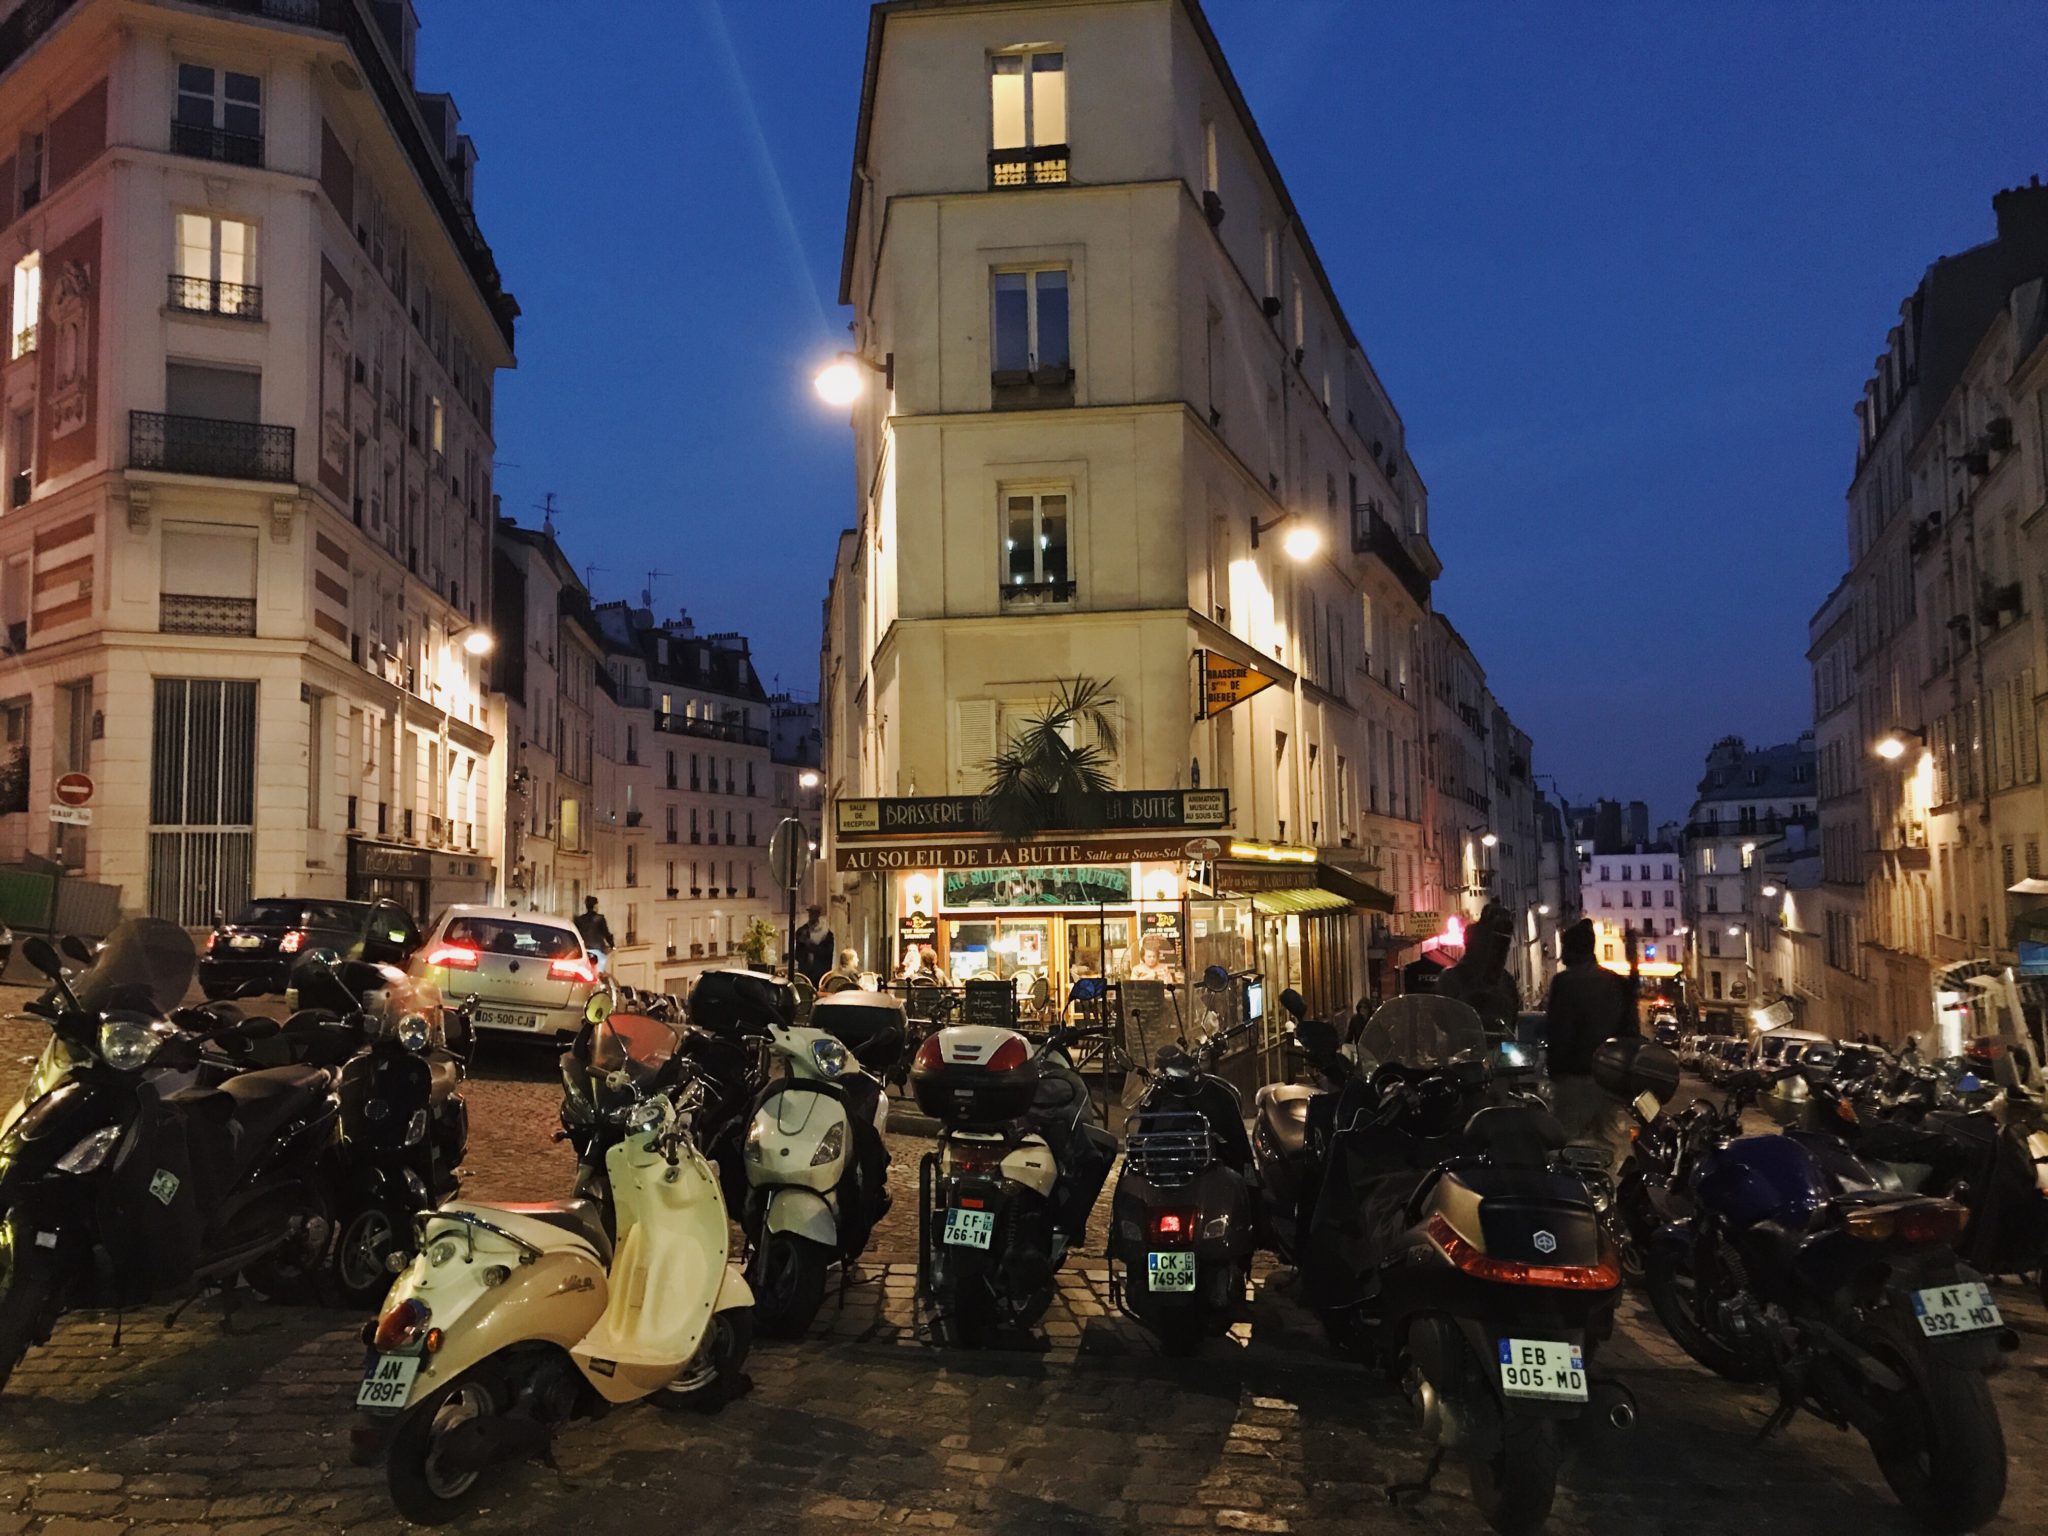 Motorbike, Paris, France